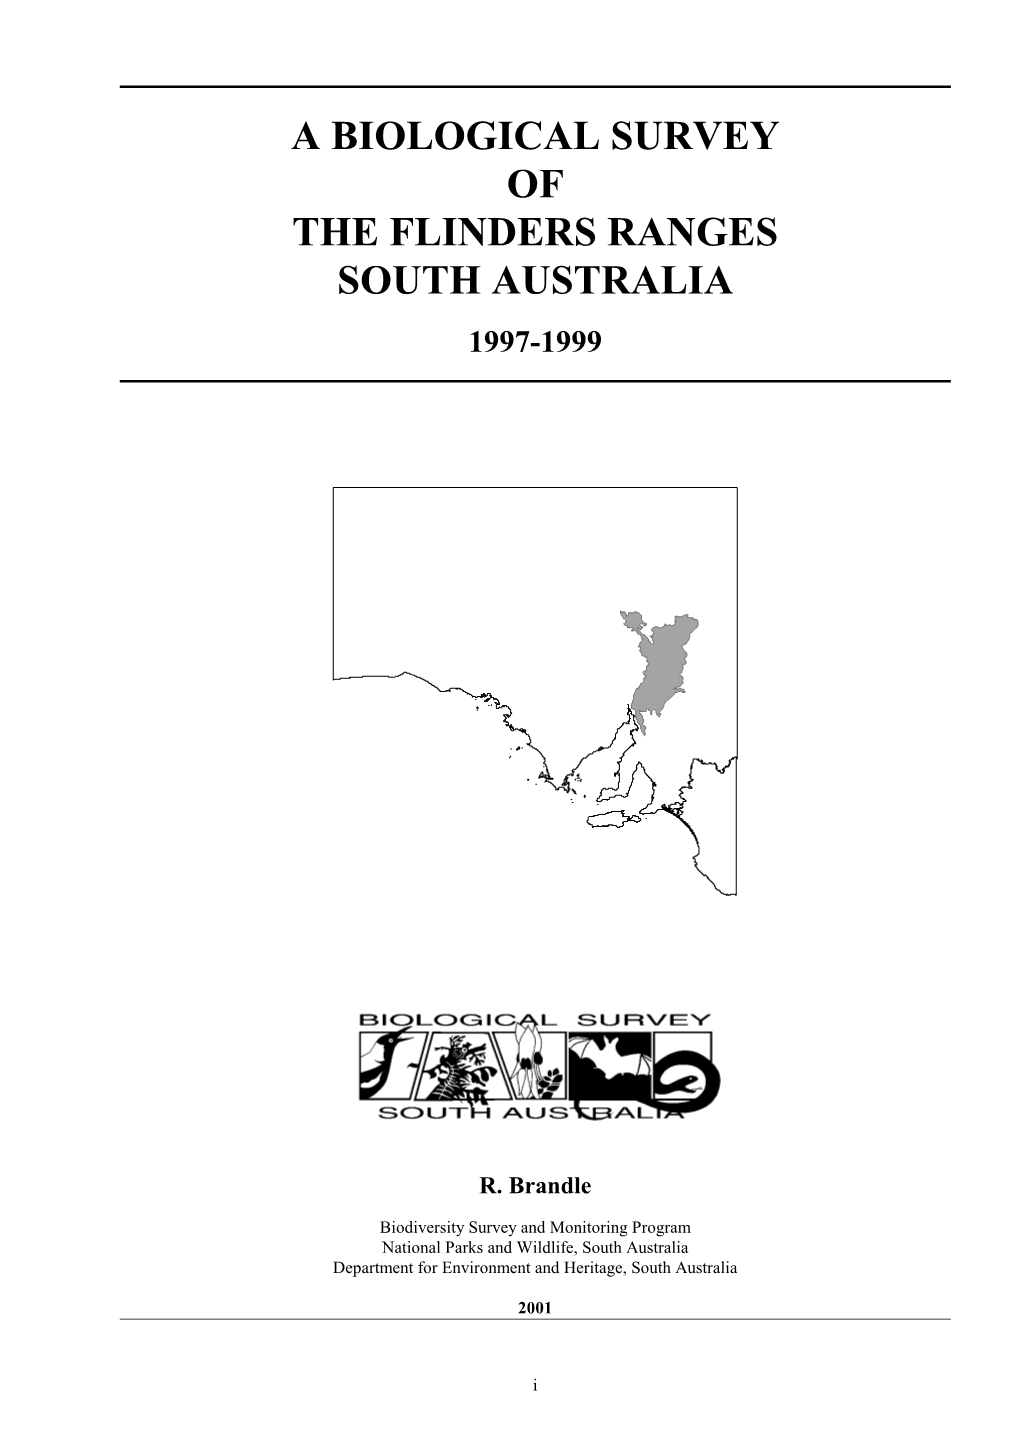 A Biological Survey of the Flinders Ranges South Australia 1997-1999